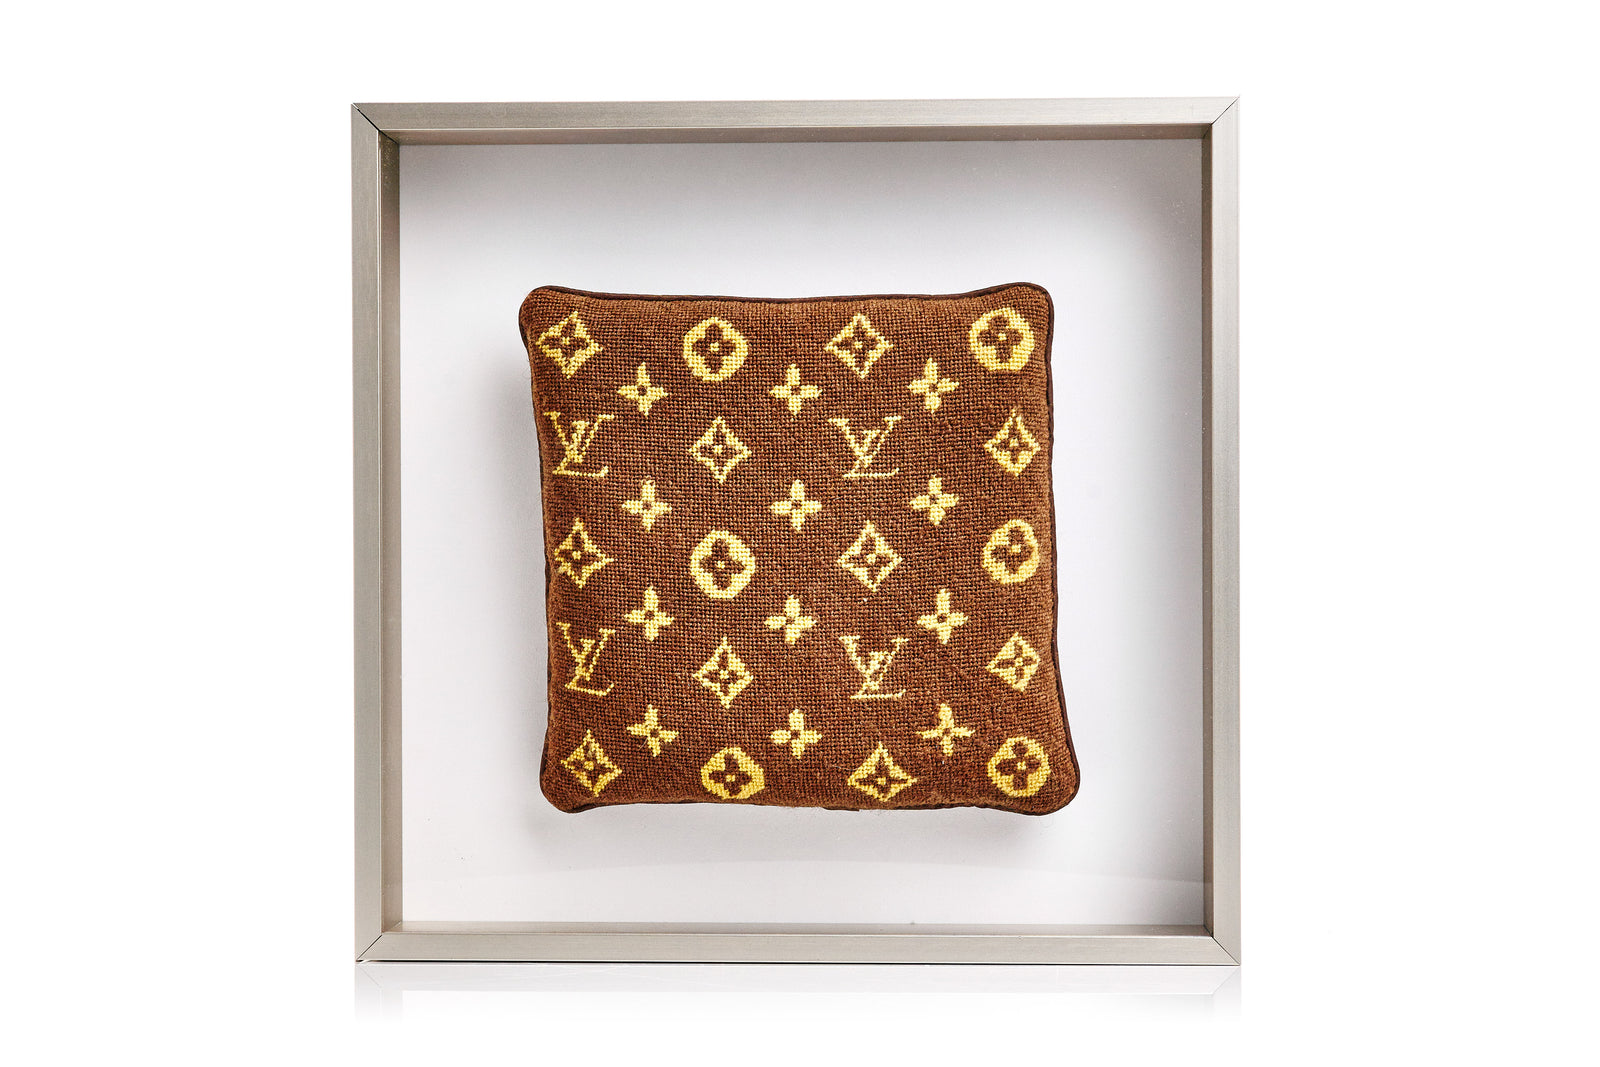 Louis Vuitton Releases Pillow Monogram Bags